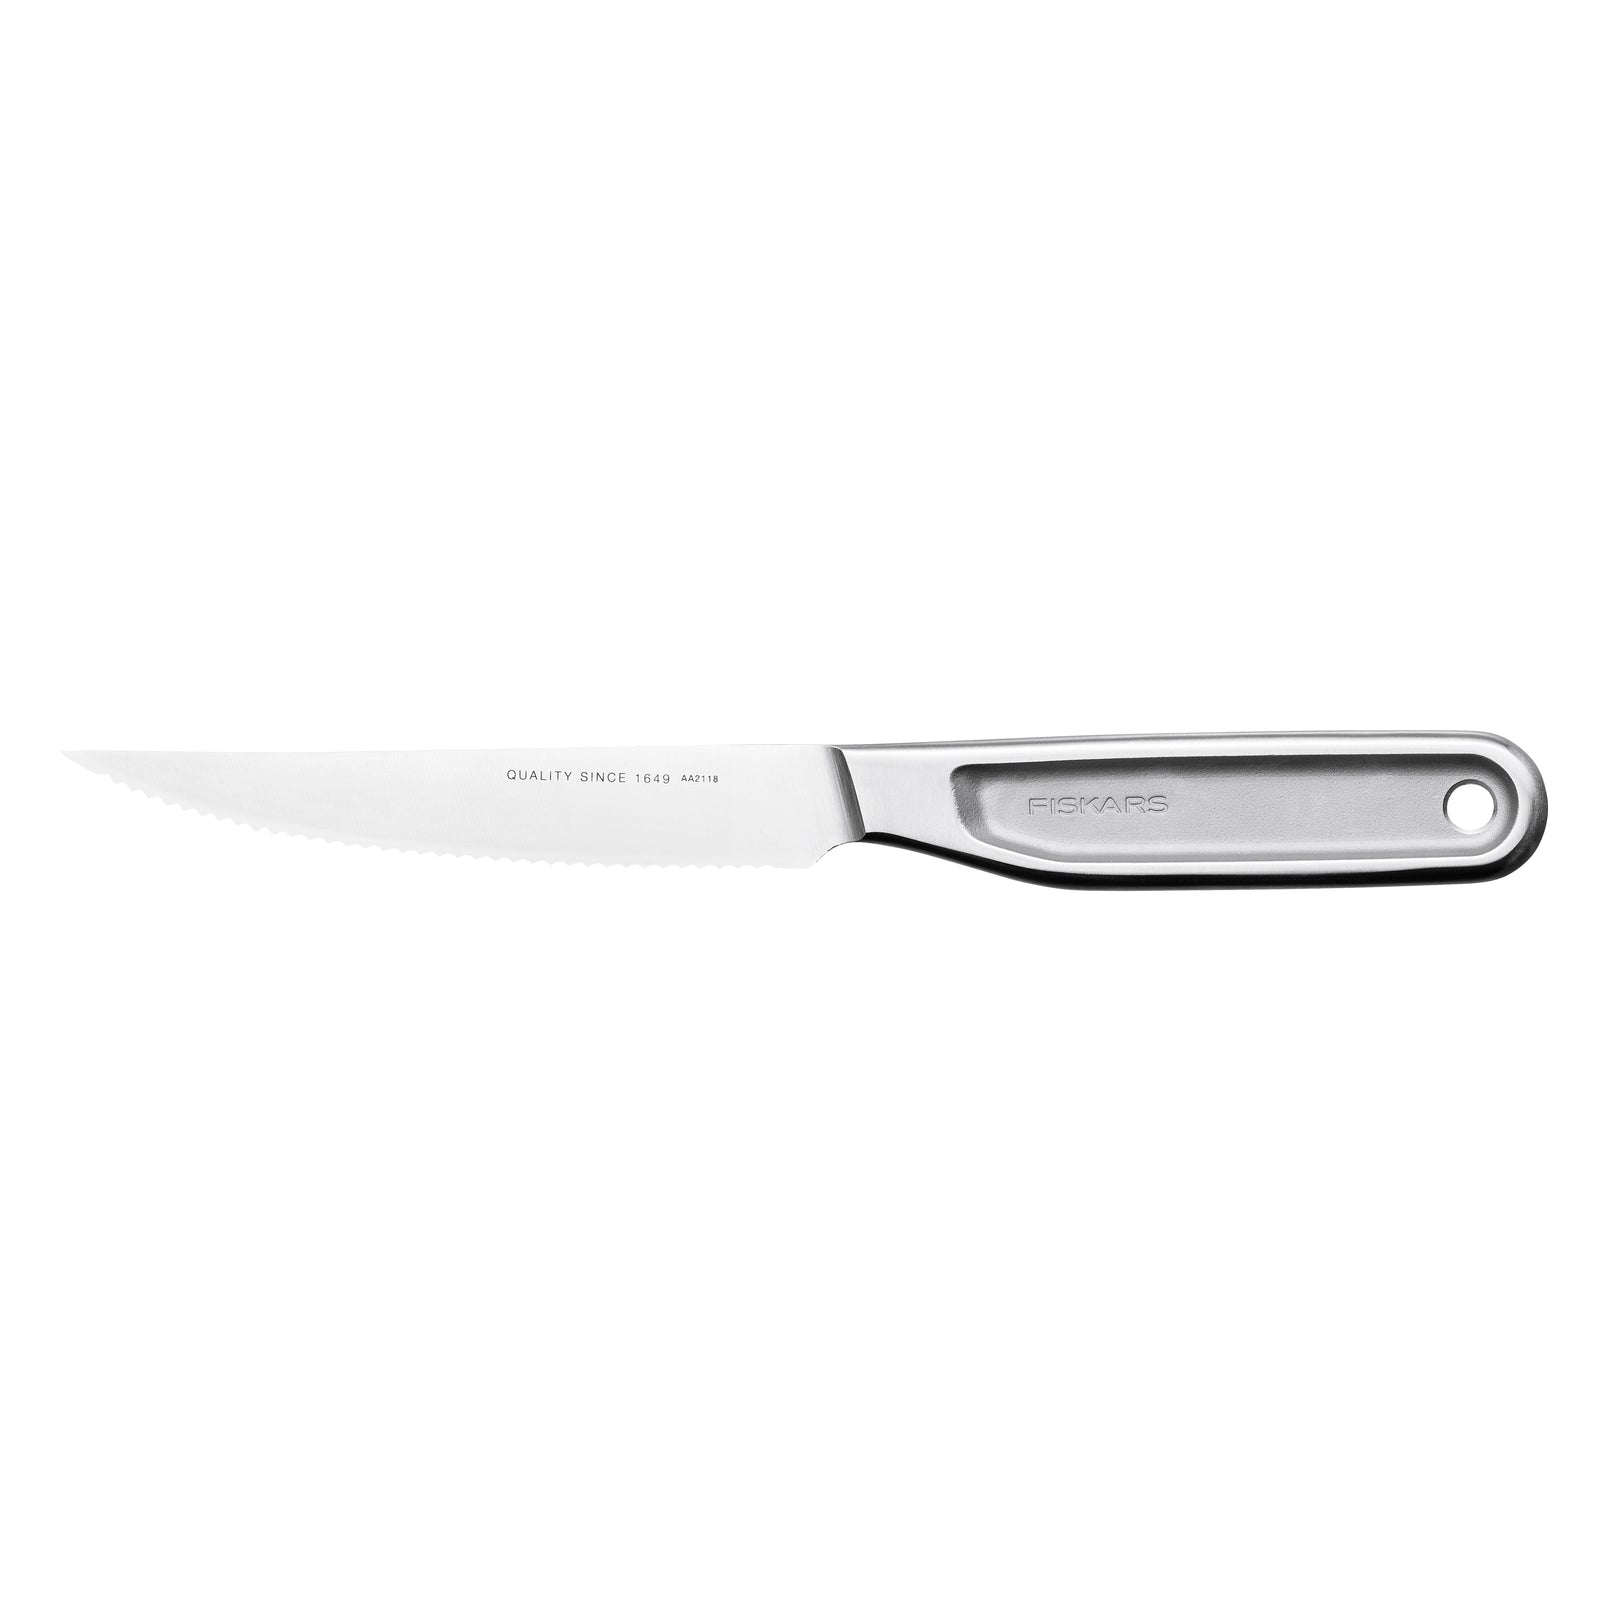 All Steel Tomato Knife 12cm - fiskars - Bluecashew Kitchen Homestead